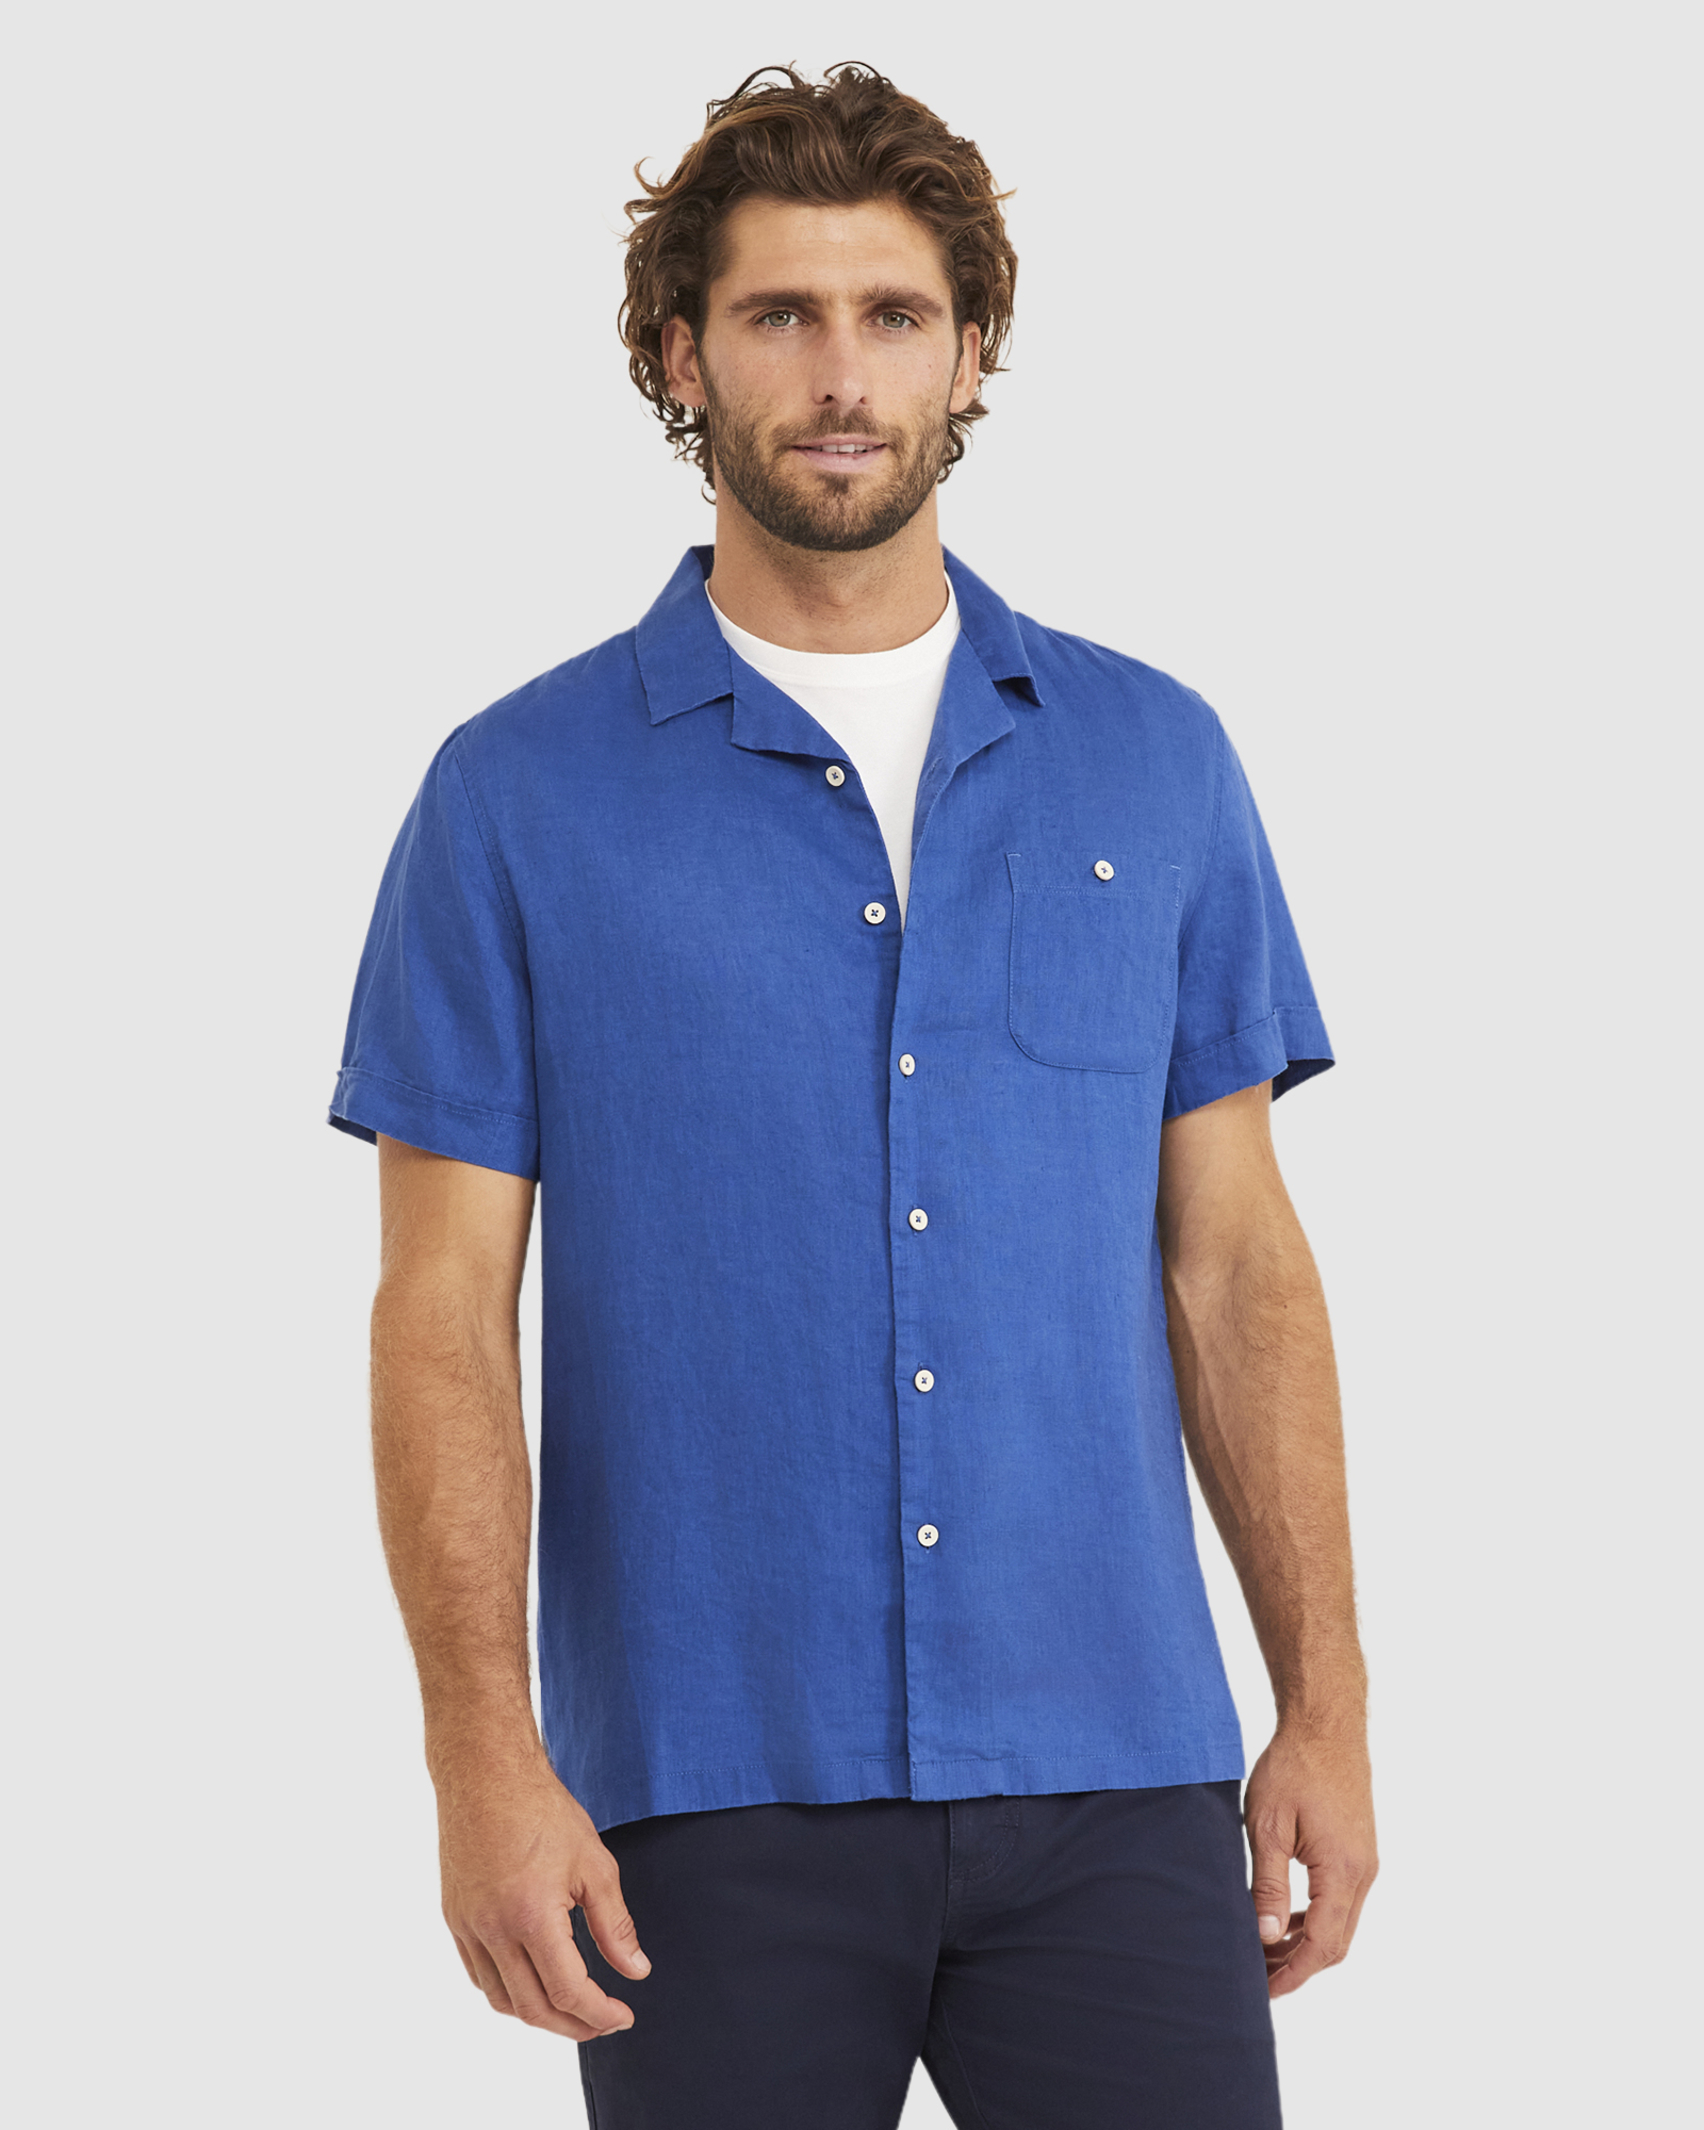 Hurley Short Sleeve Shirt in DELFT BLUE